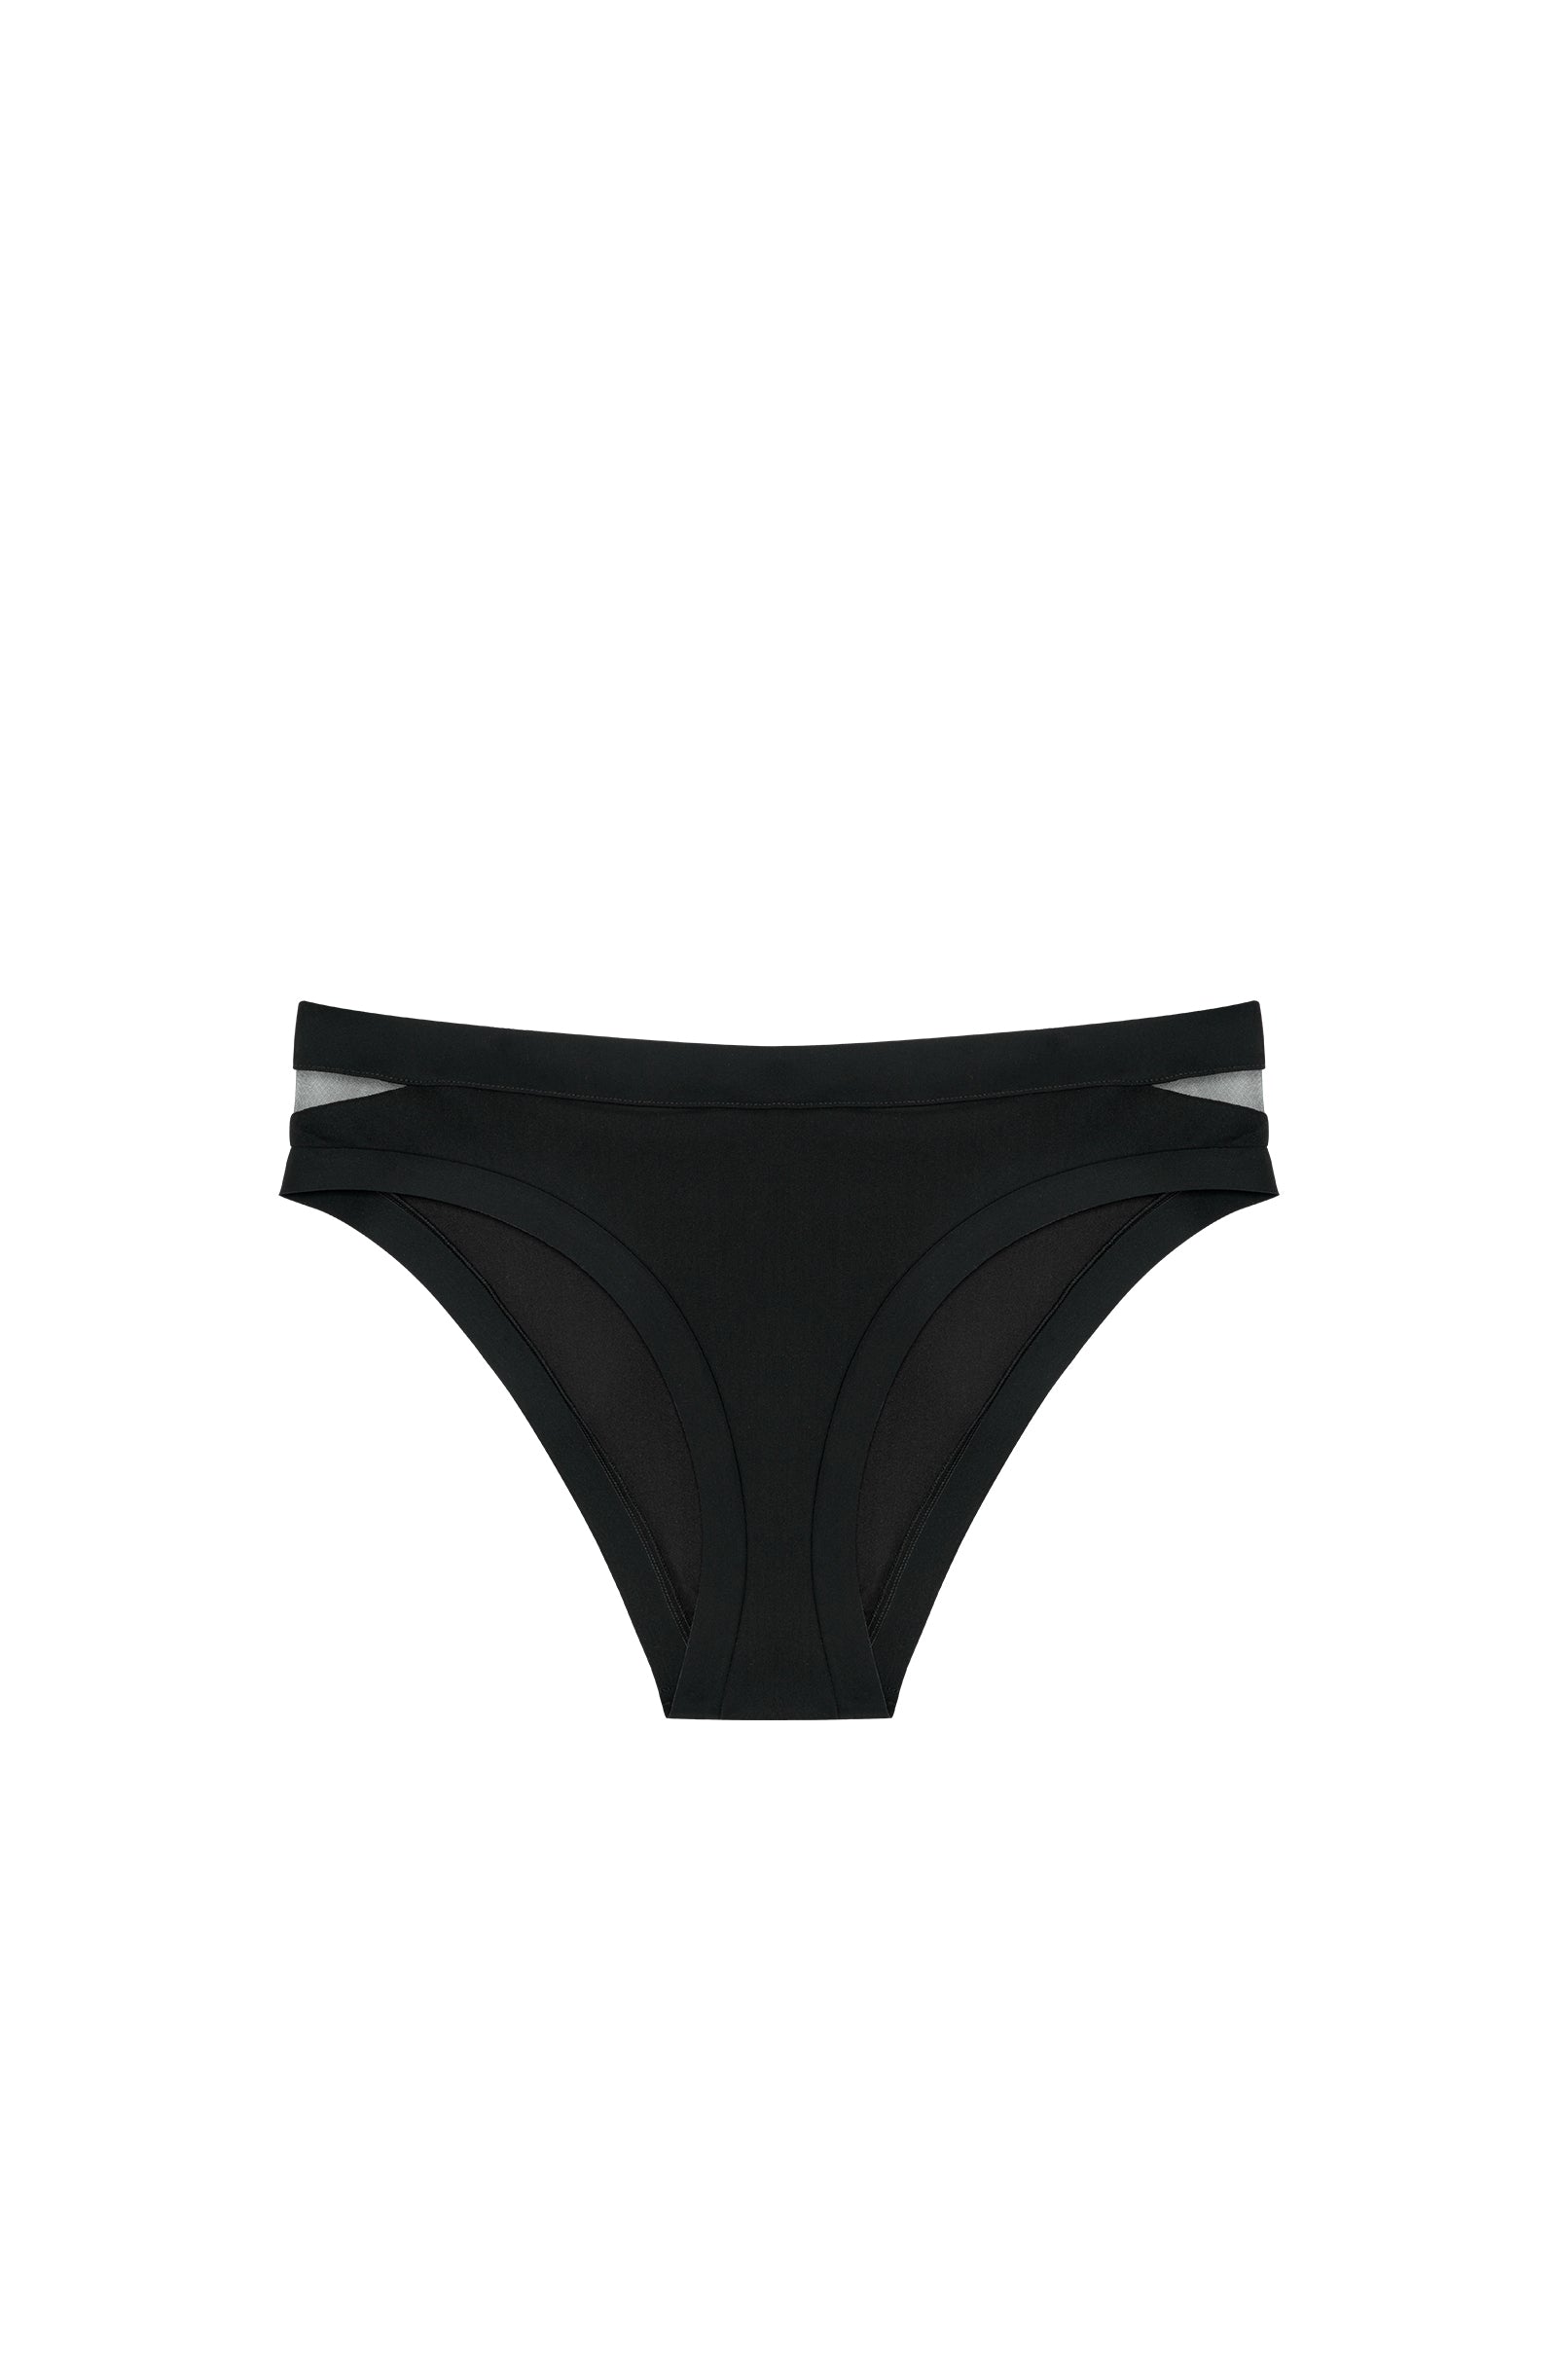 kylie - Black openwork bikini bottoms